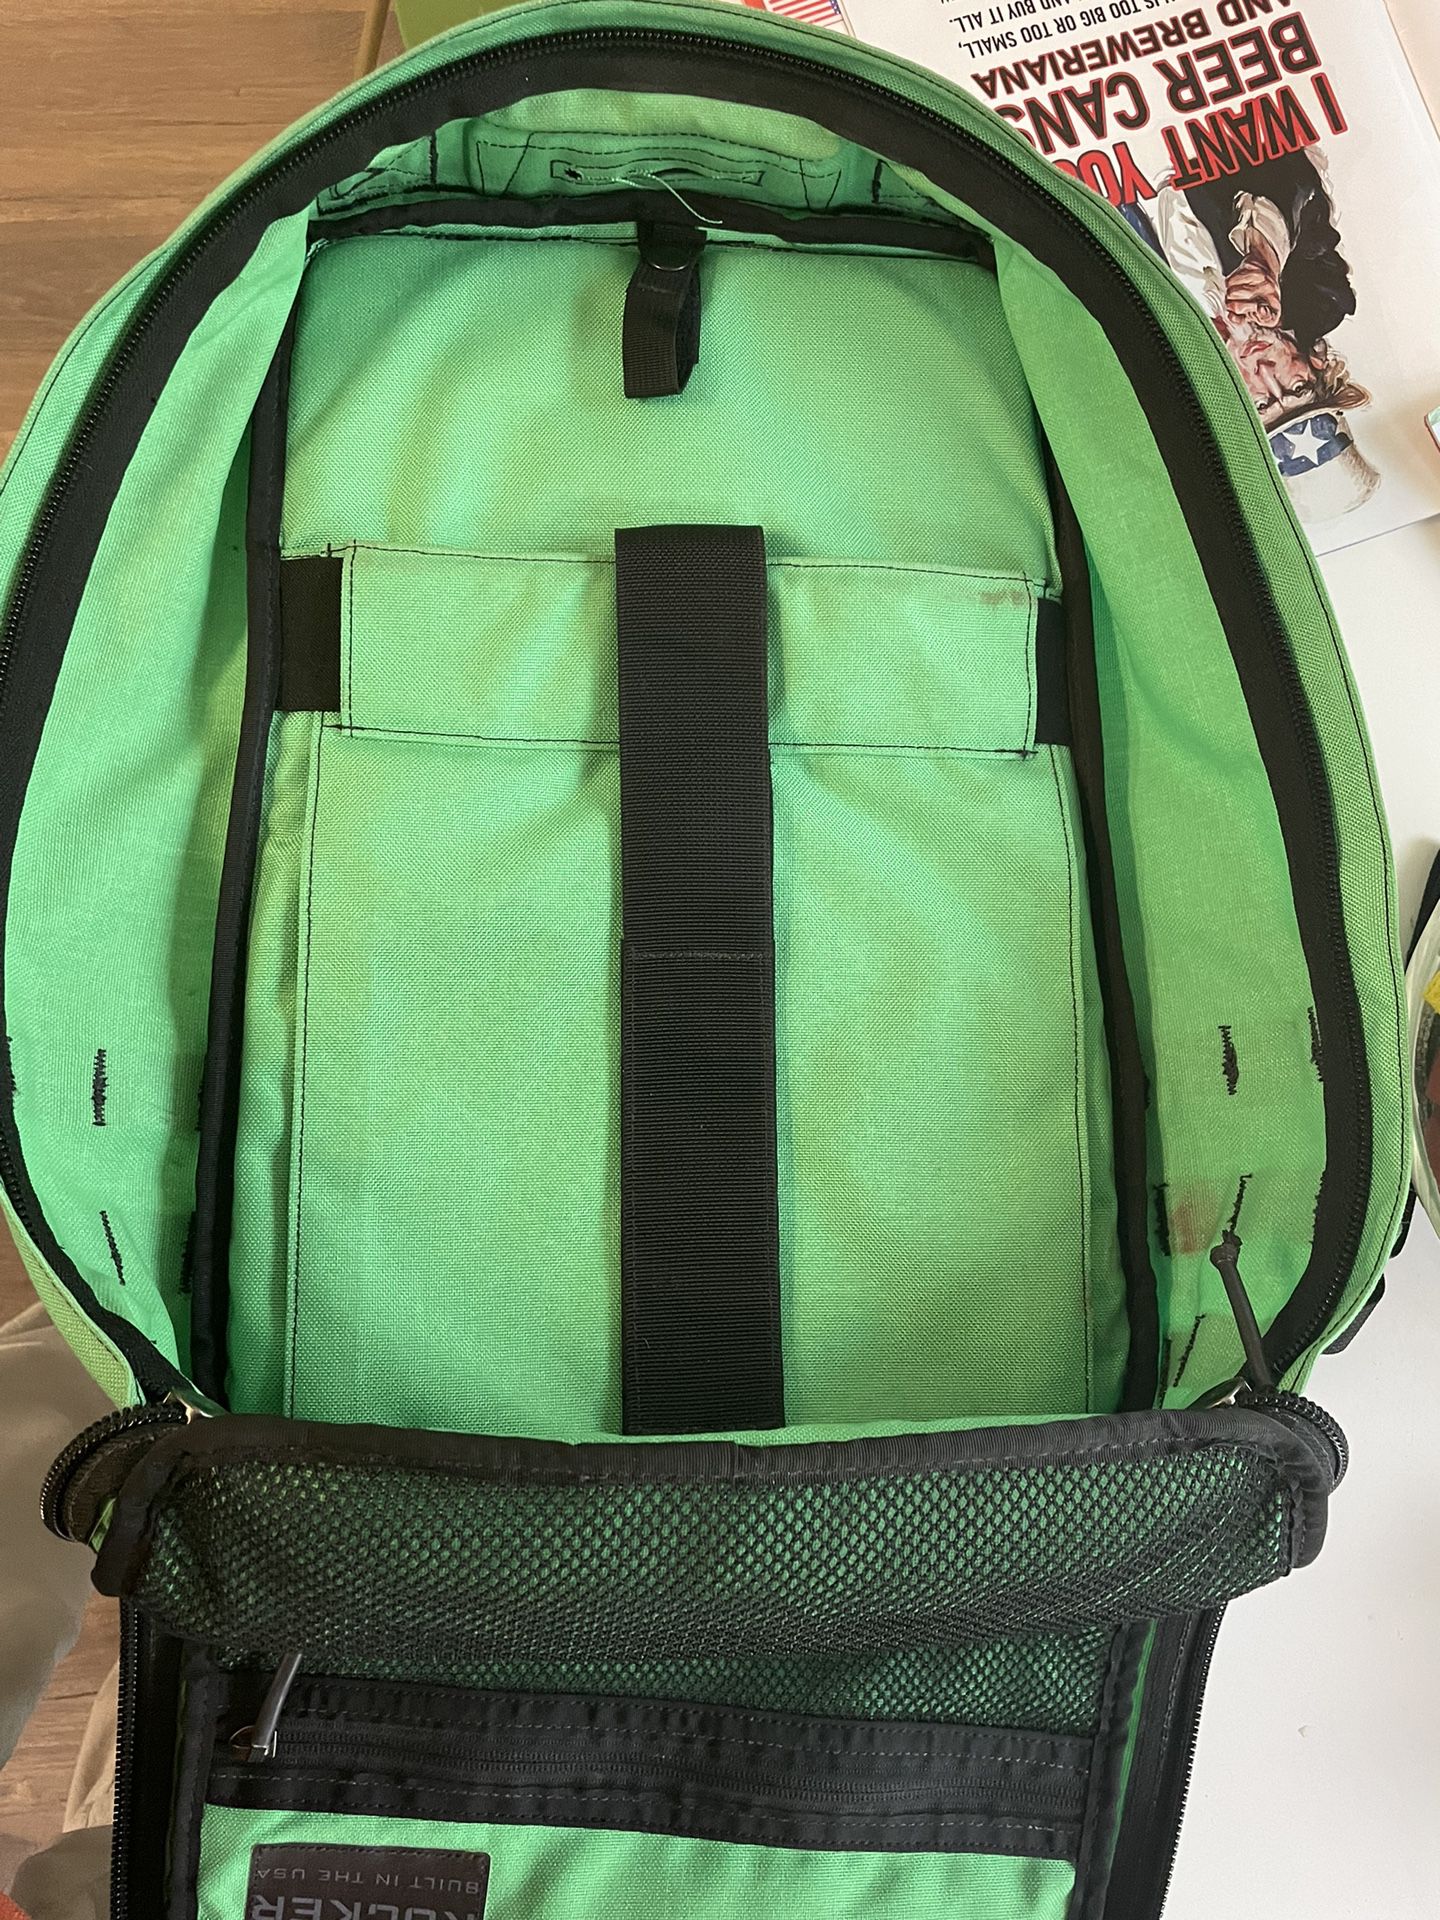 Goruck Backpack